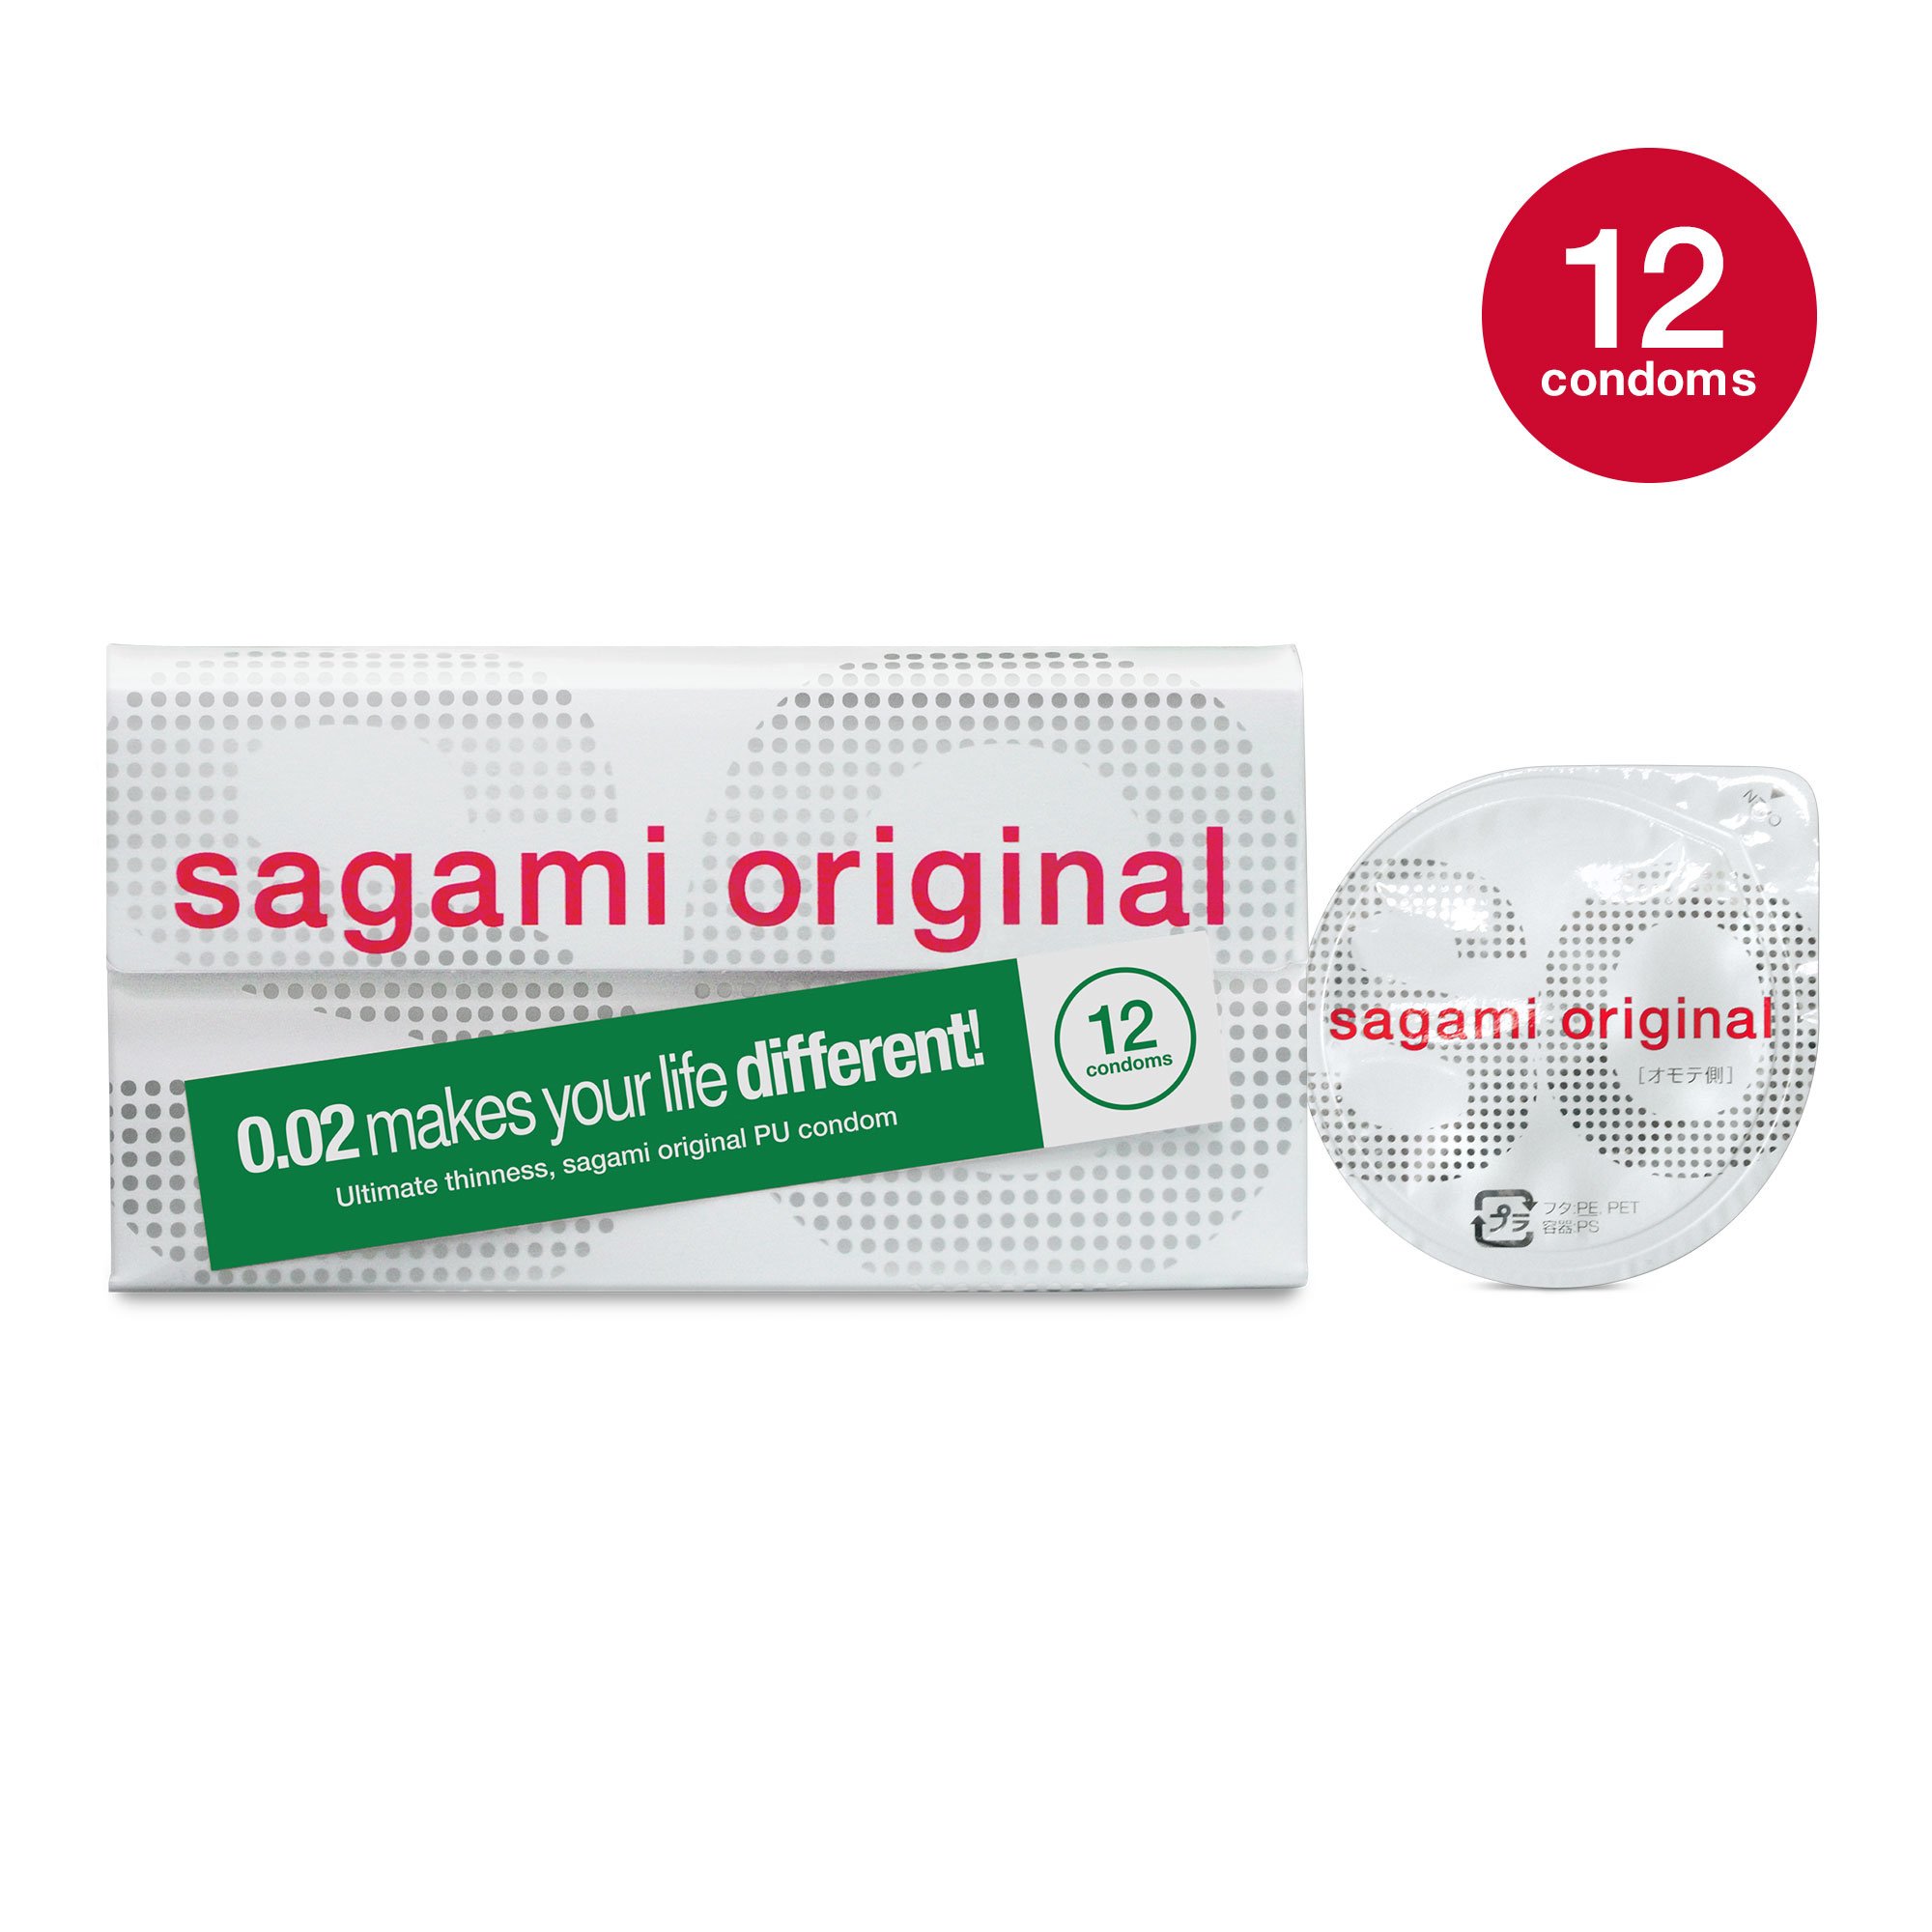 Sagami *Original 0.02*